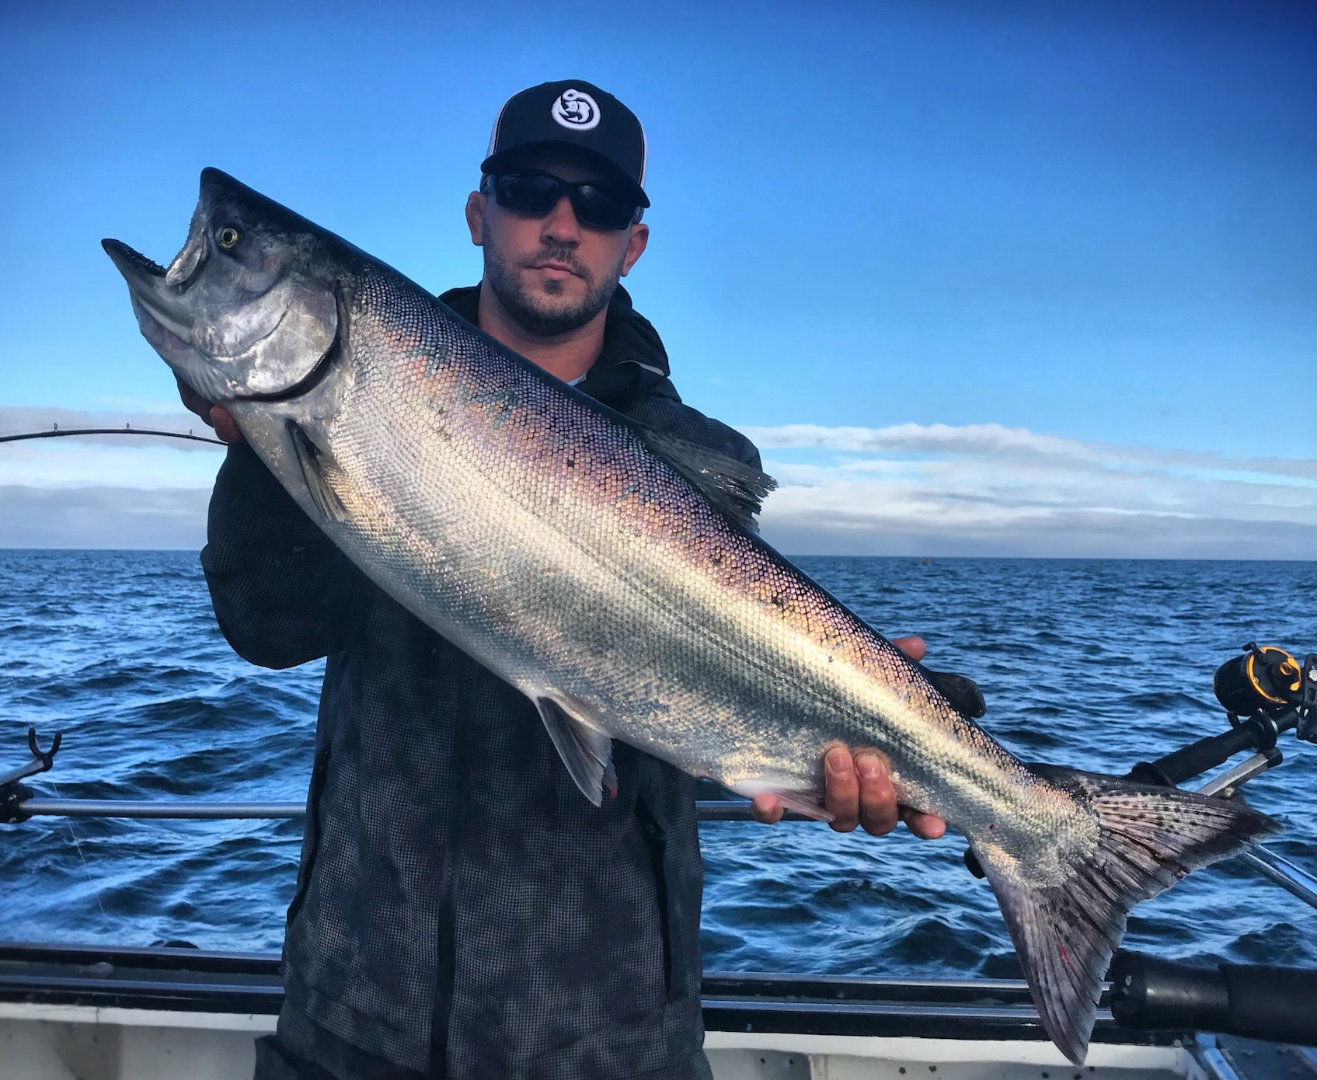 Short Season Ahead for Ocean Sport Salmon Anglers